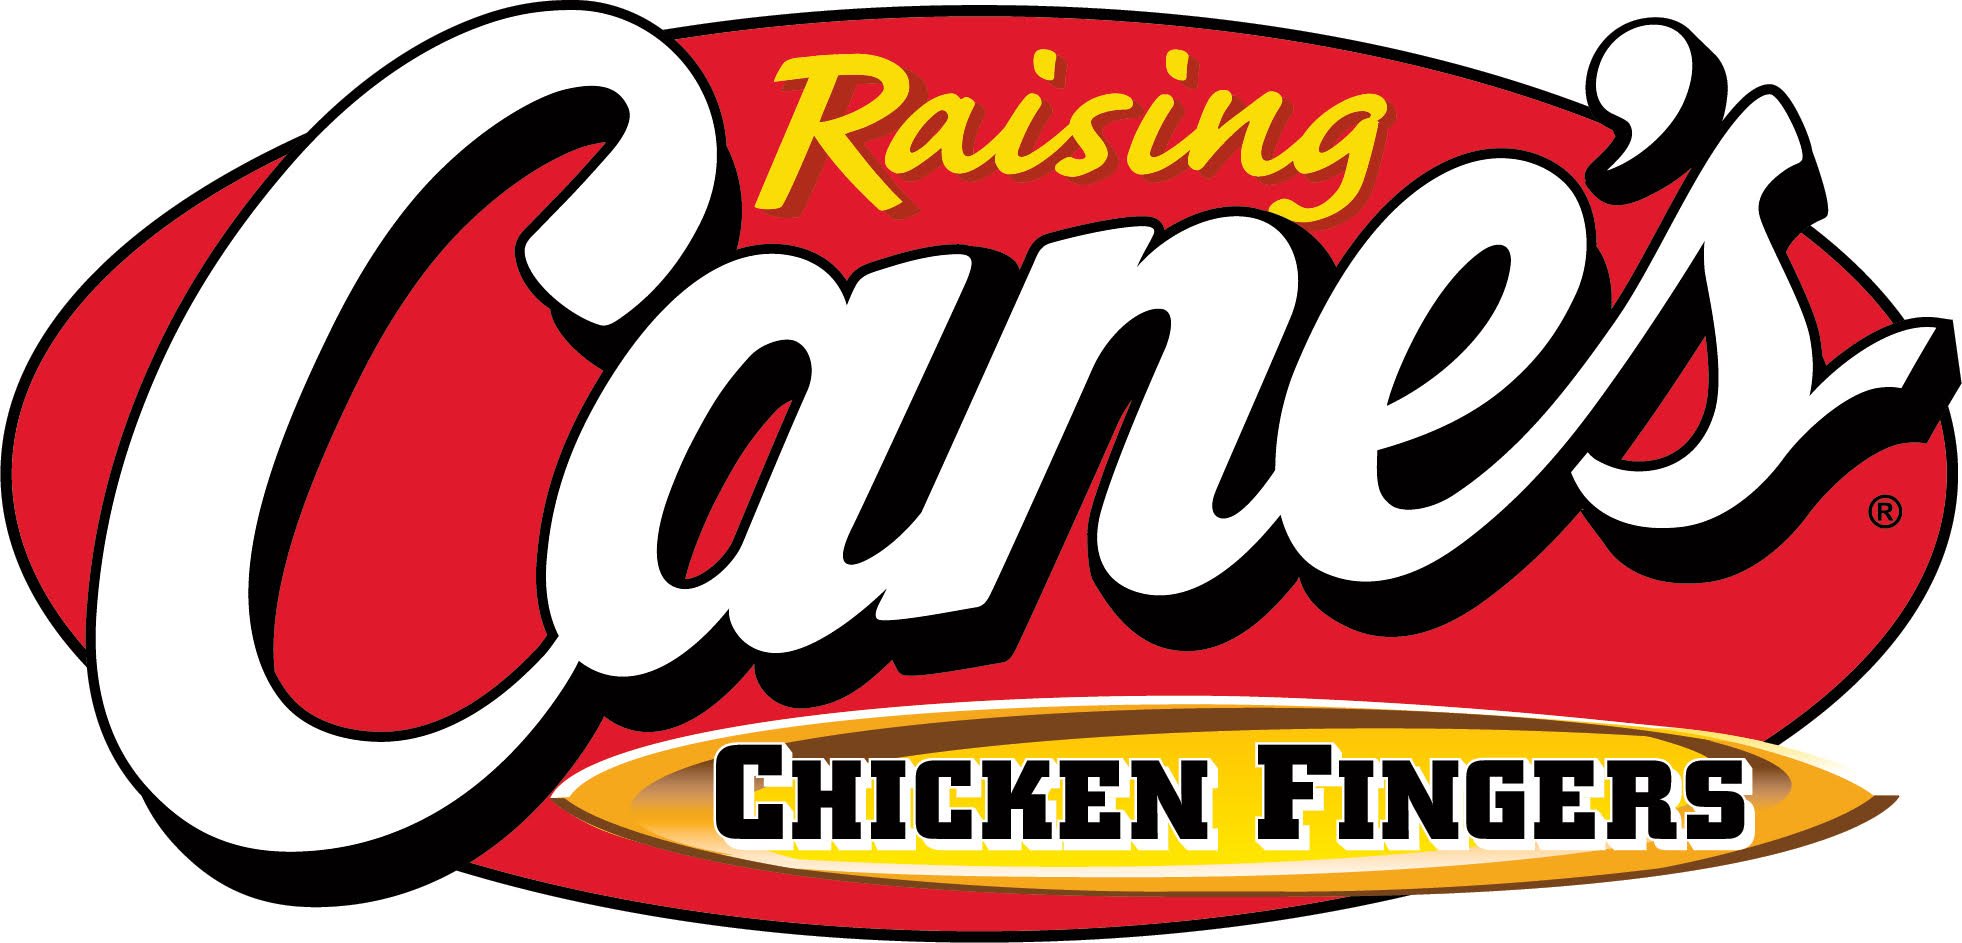 Raising Canes Logo.jpg